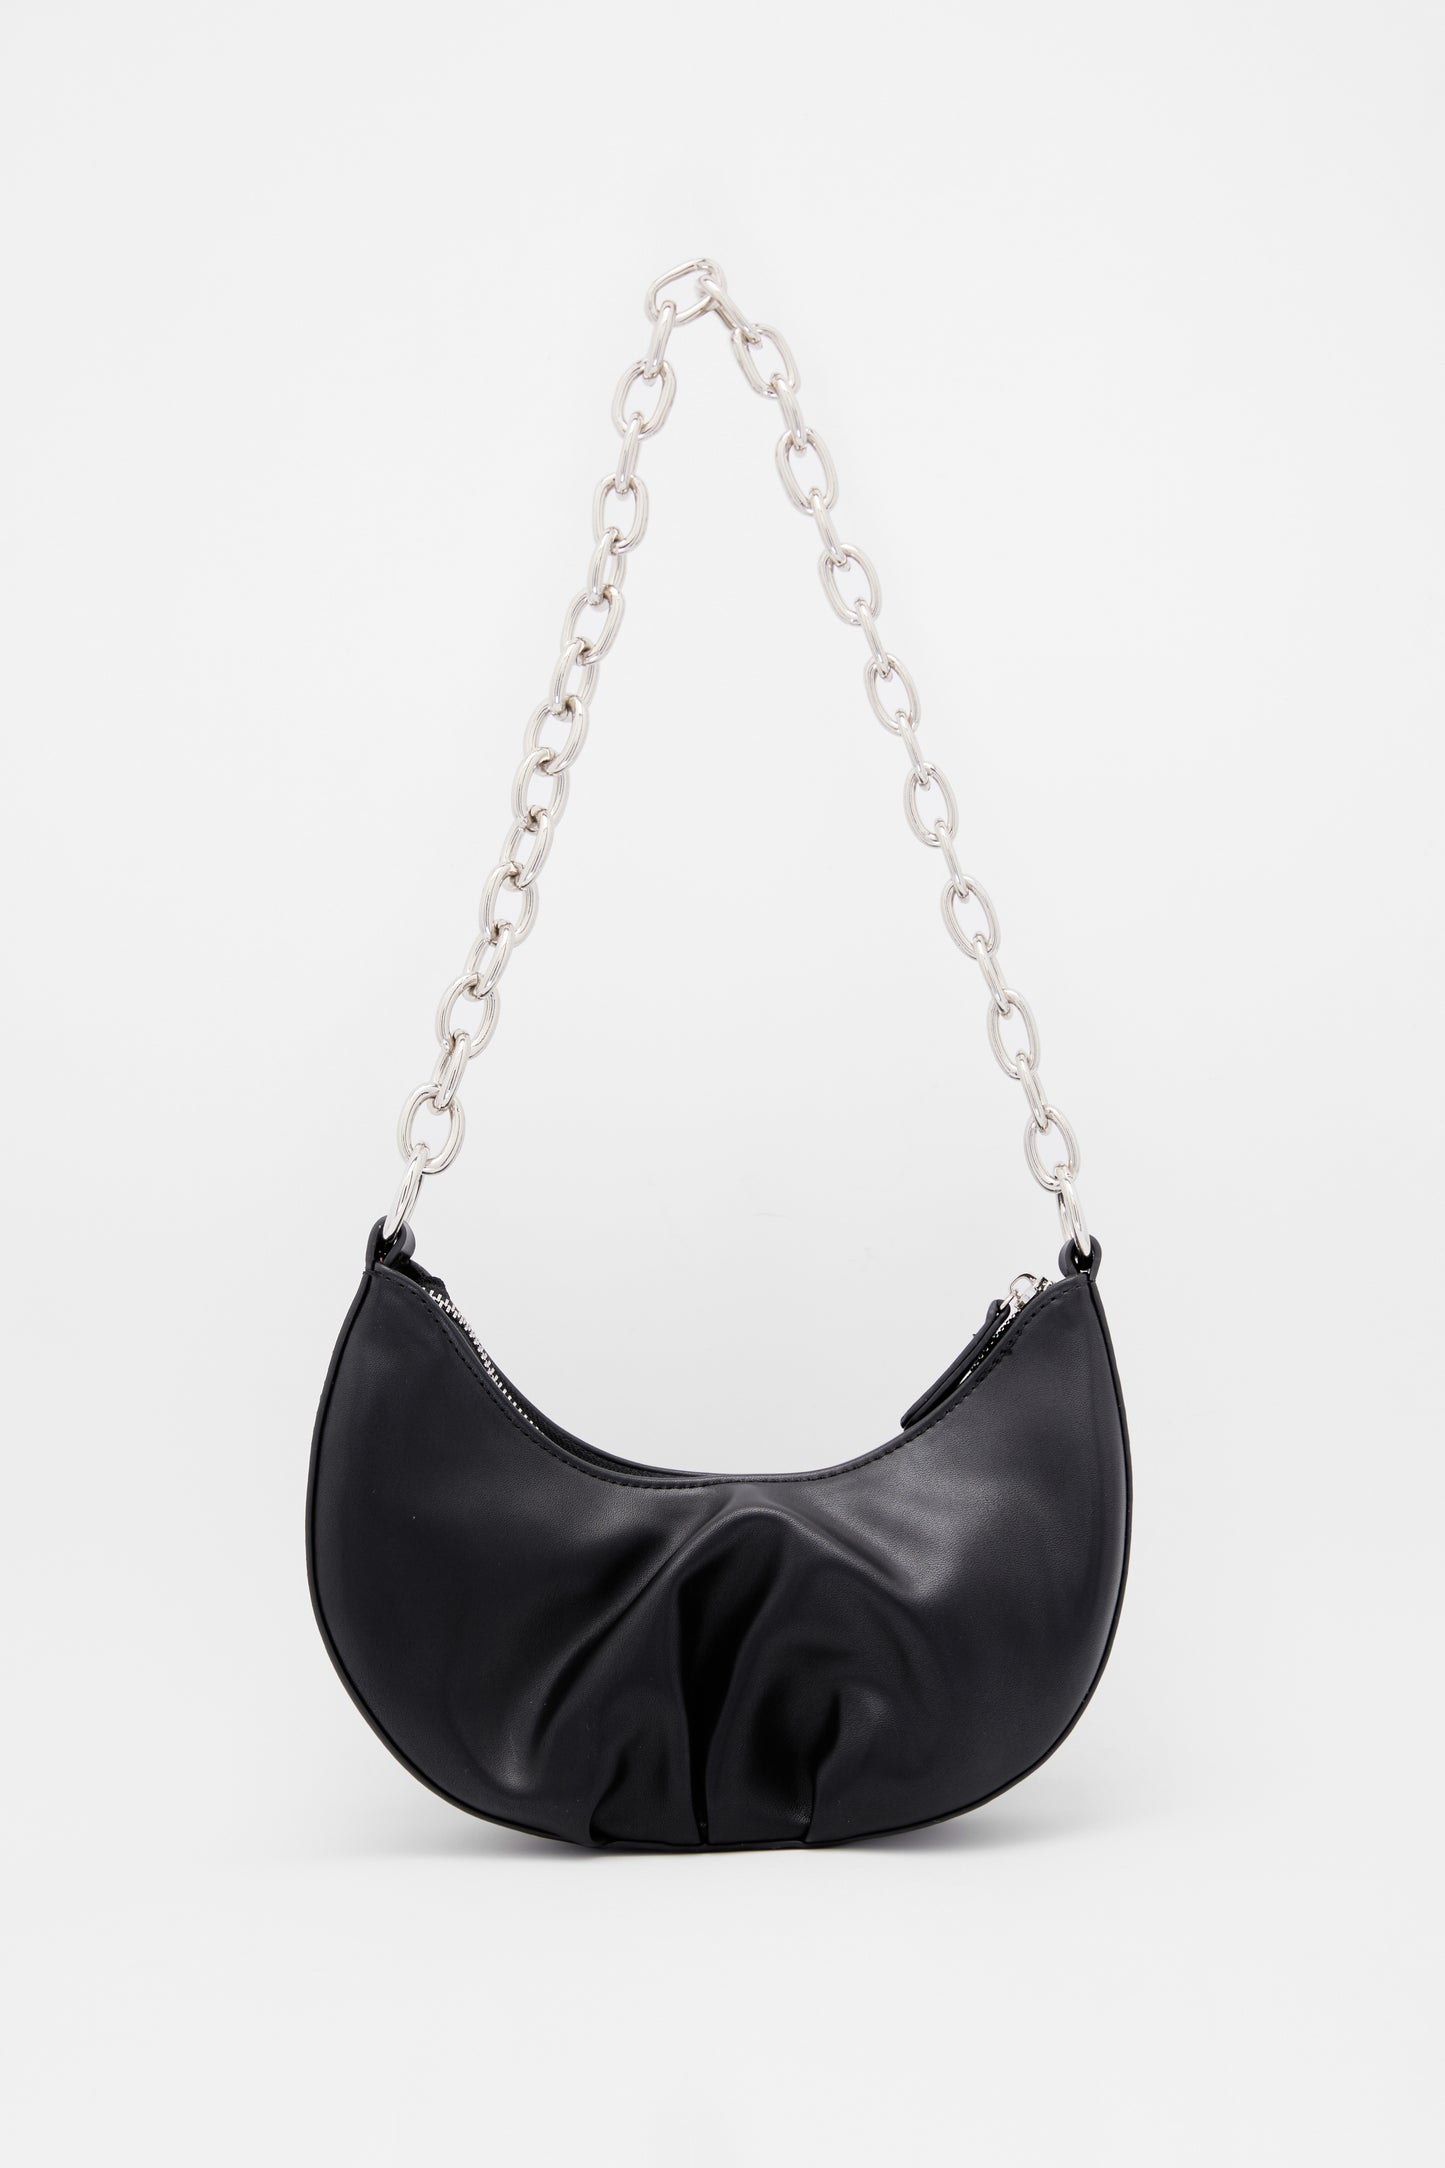 Ruched Chain Bag, Black